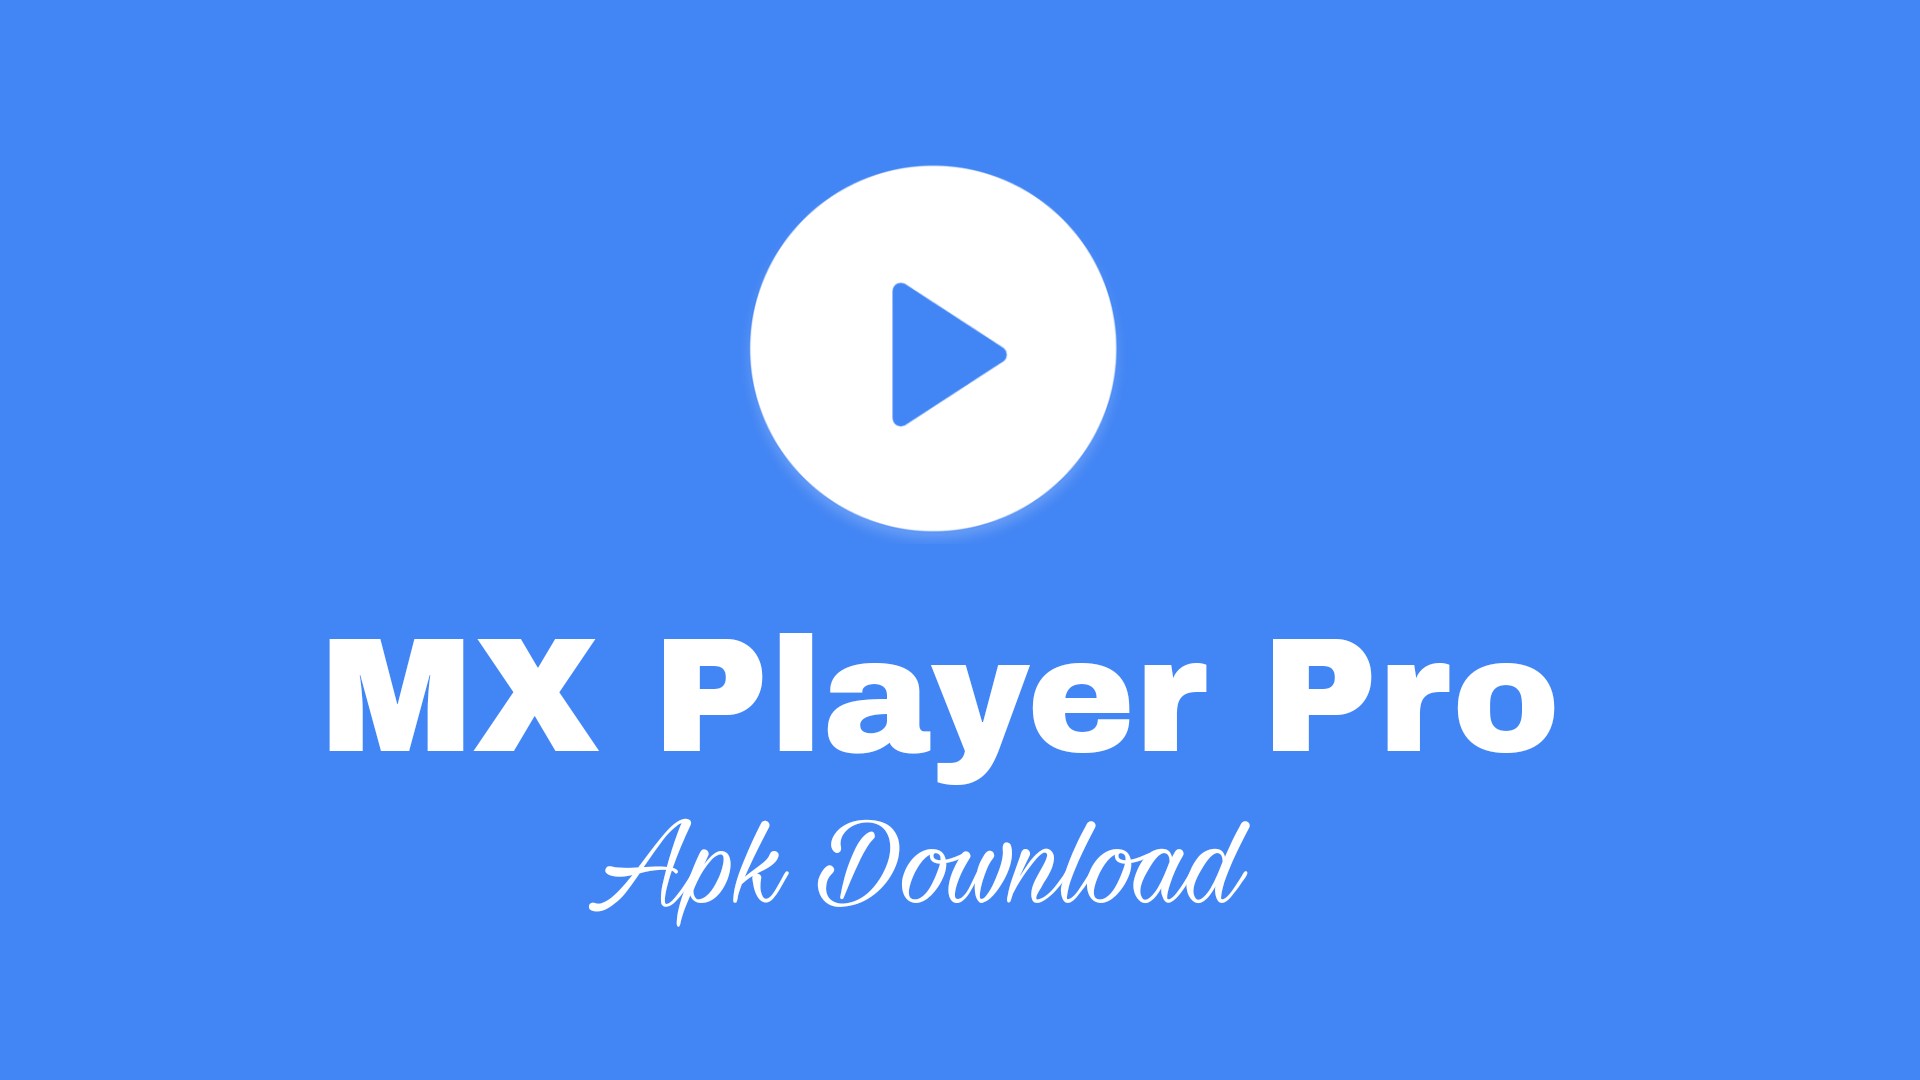 mx player pro apk download latest version